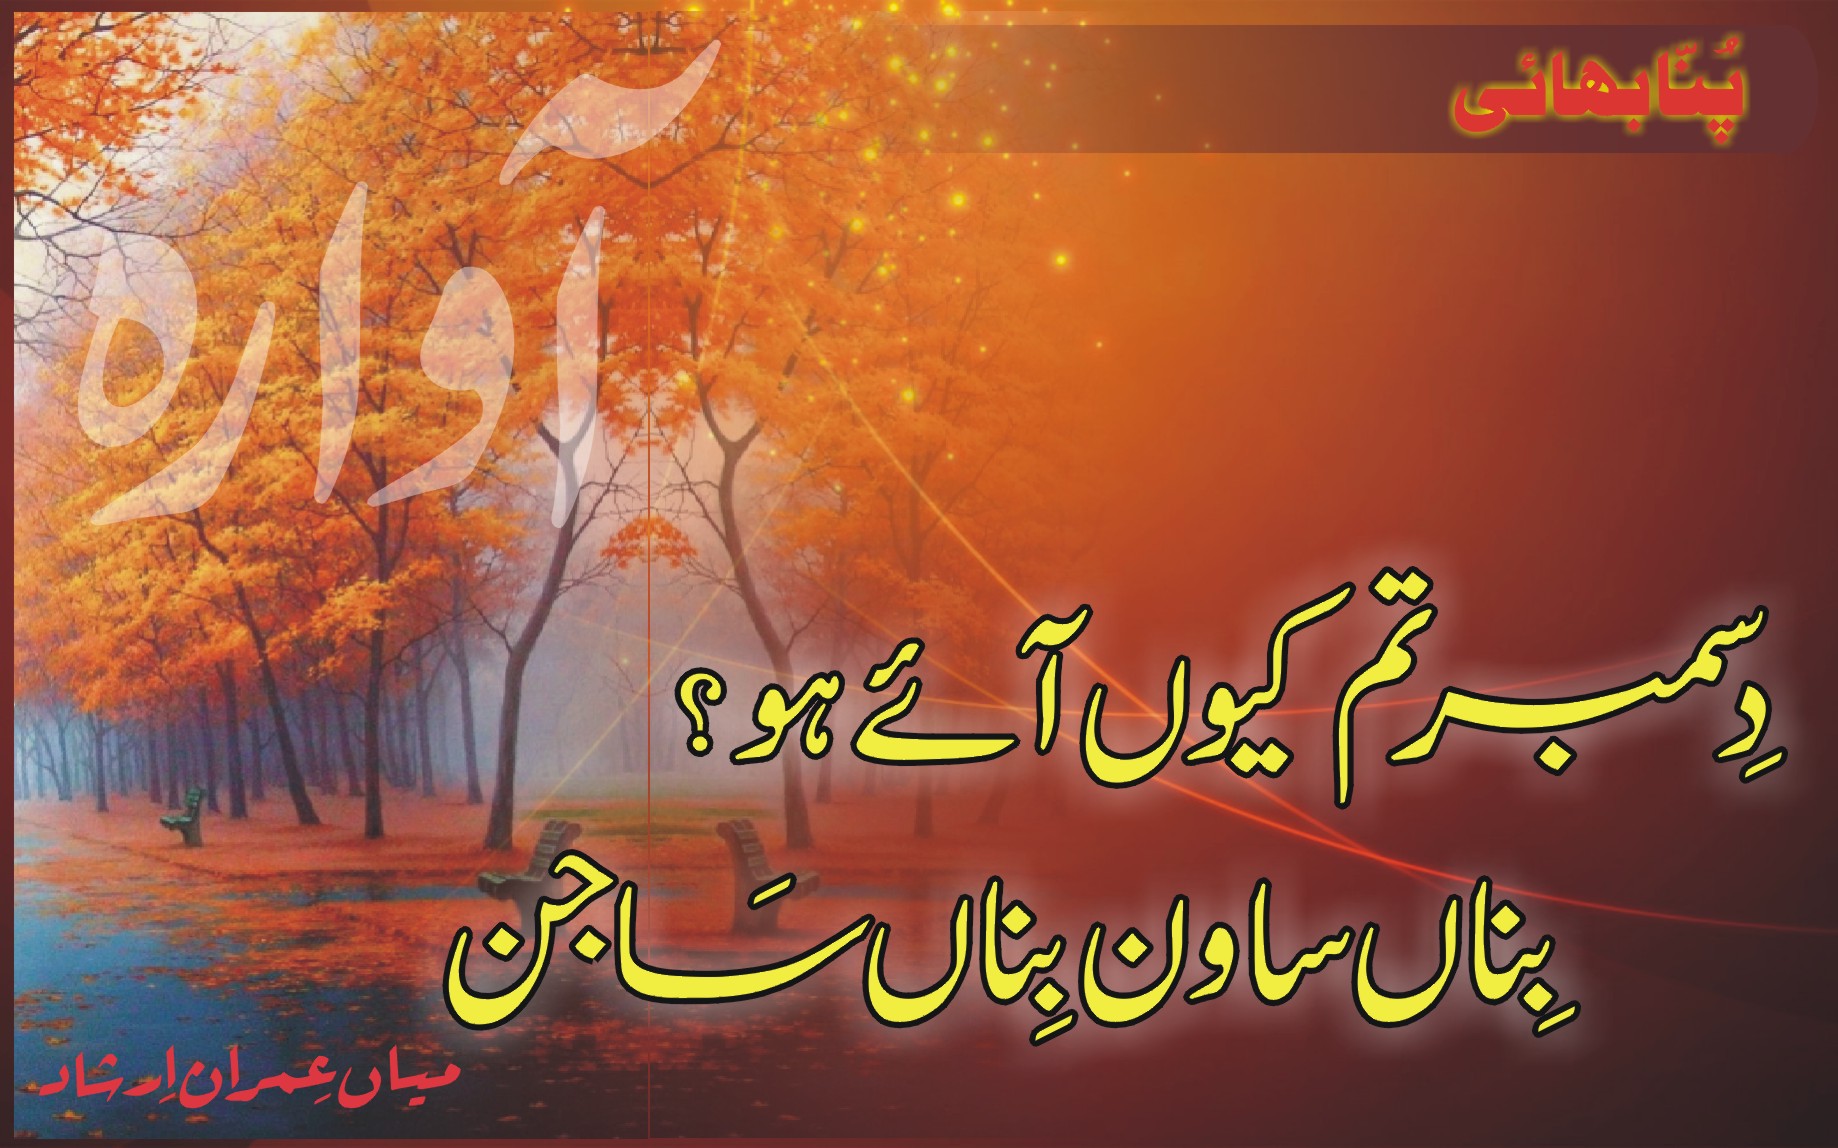 Poetry Wallpaper In Urdu - Poetry About December In Urdu , HD Wallpaper & Backgrounds